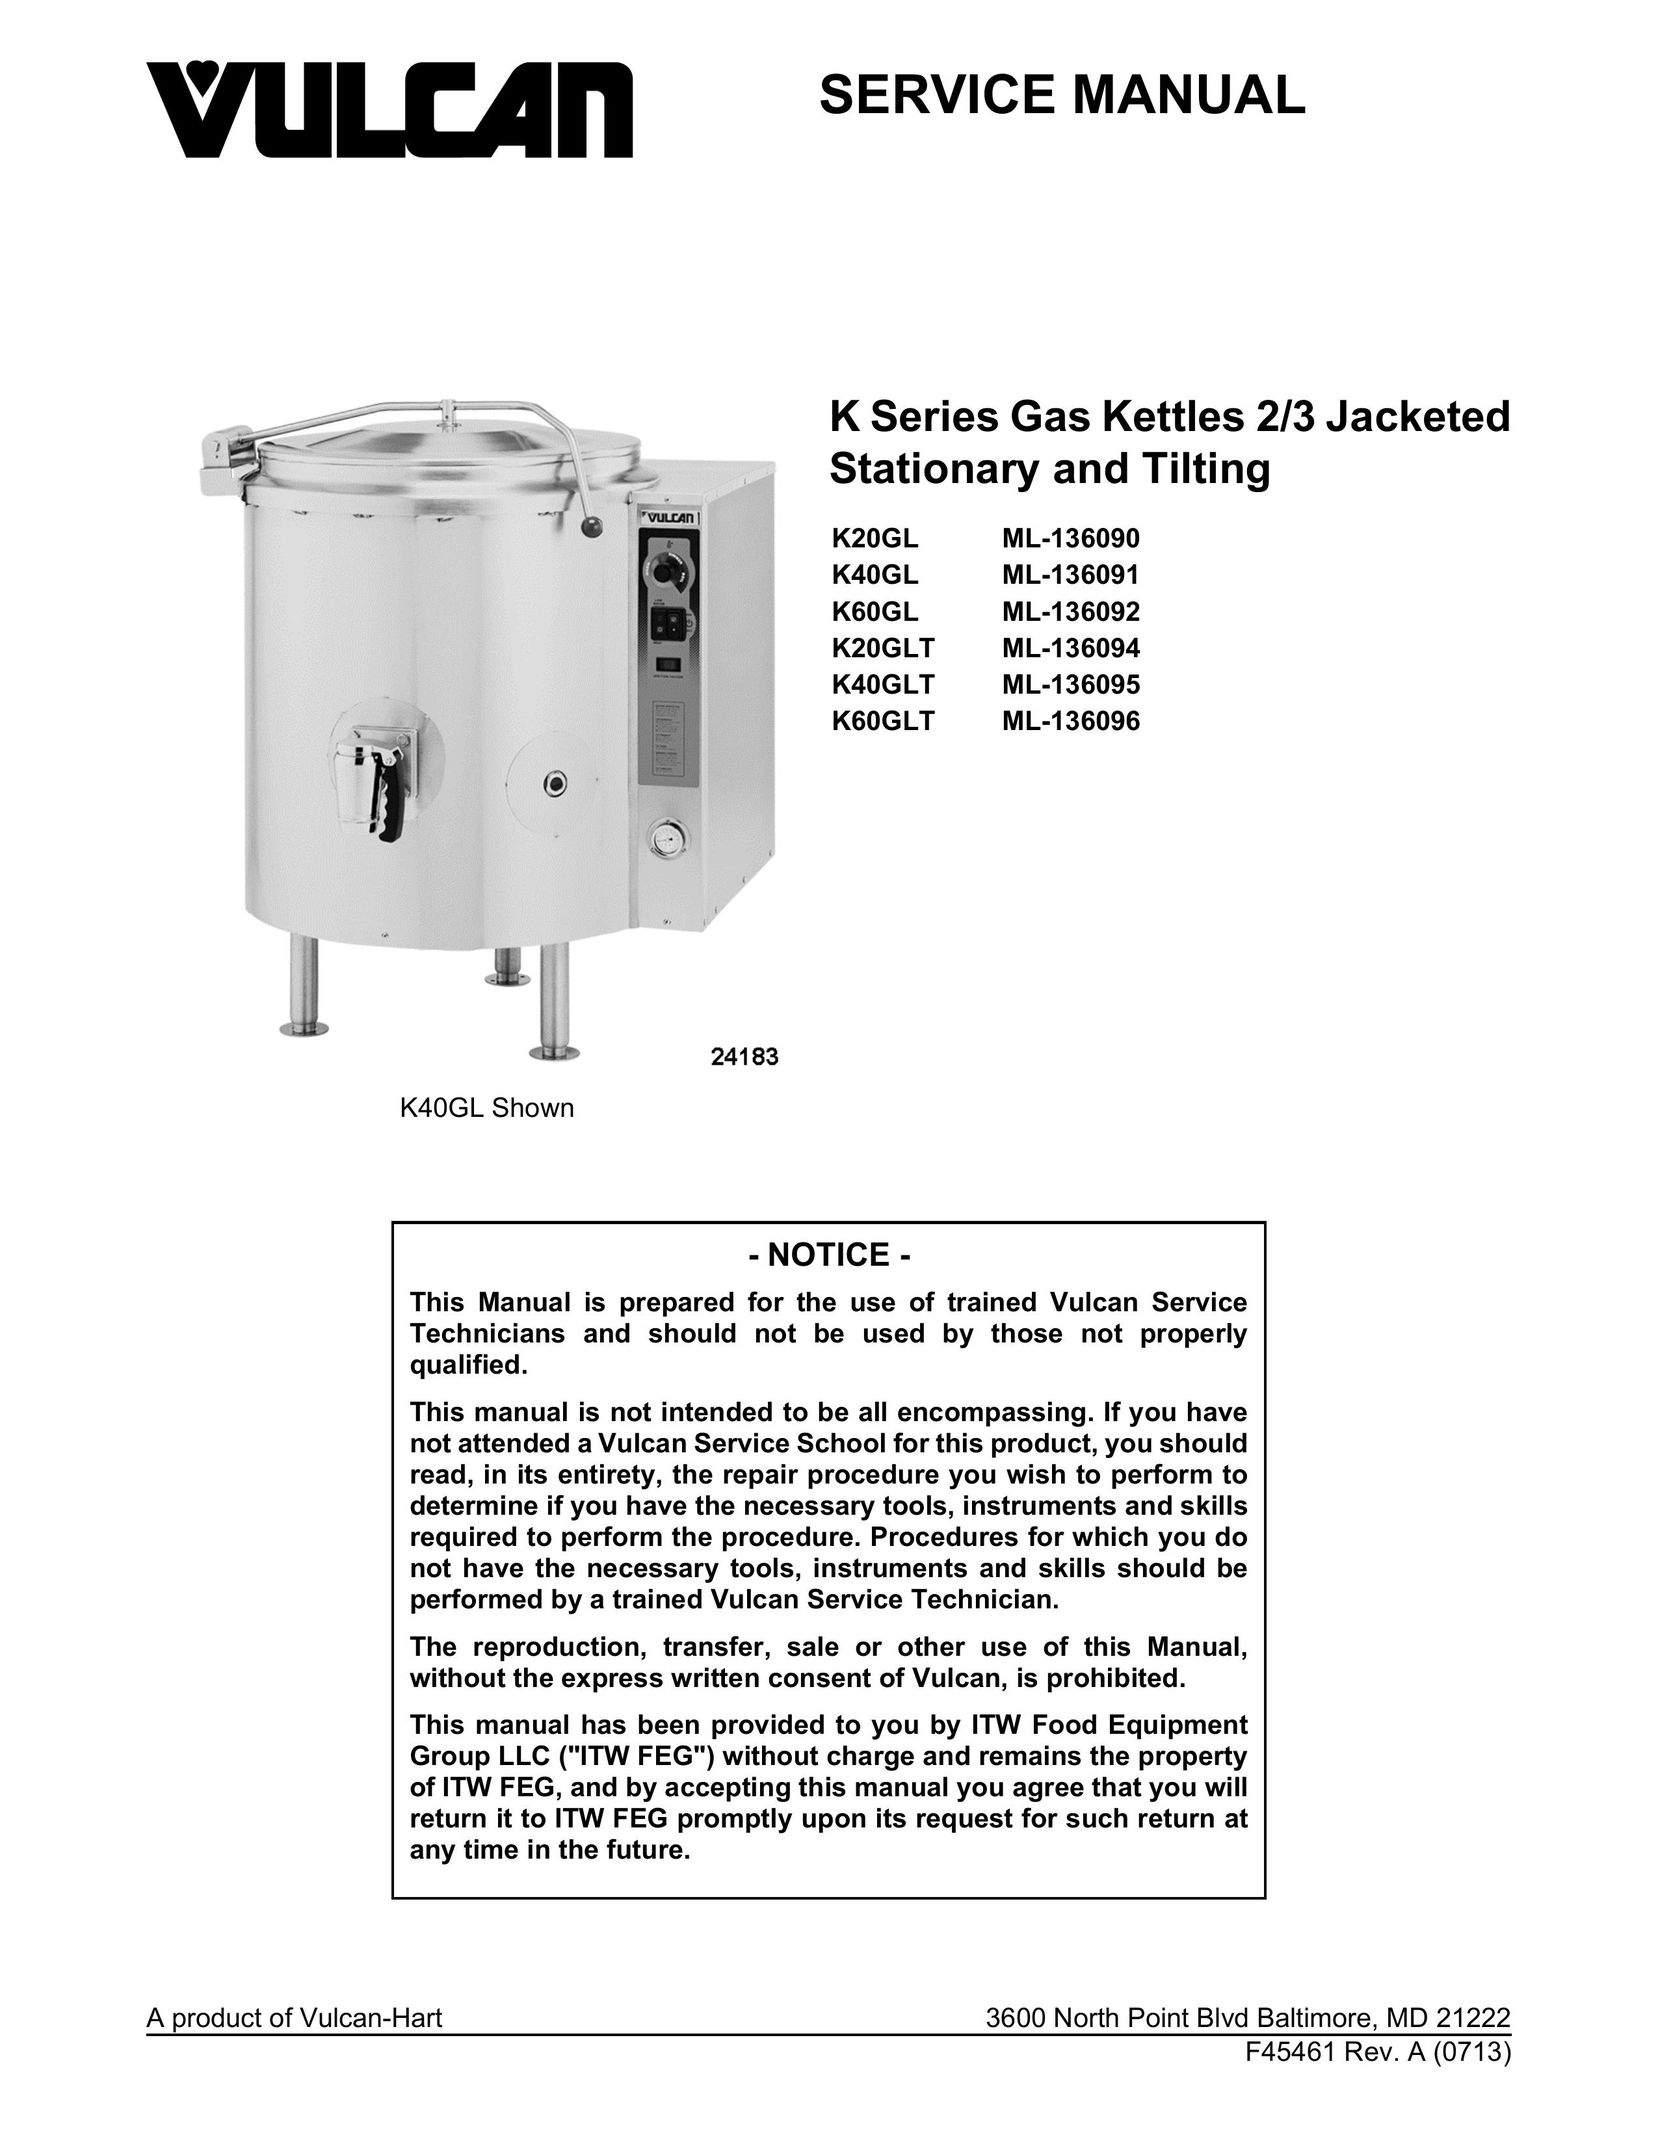 Vulcan-Hart K40GLT Hot Beverage Maker User Manual